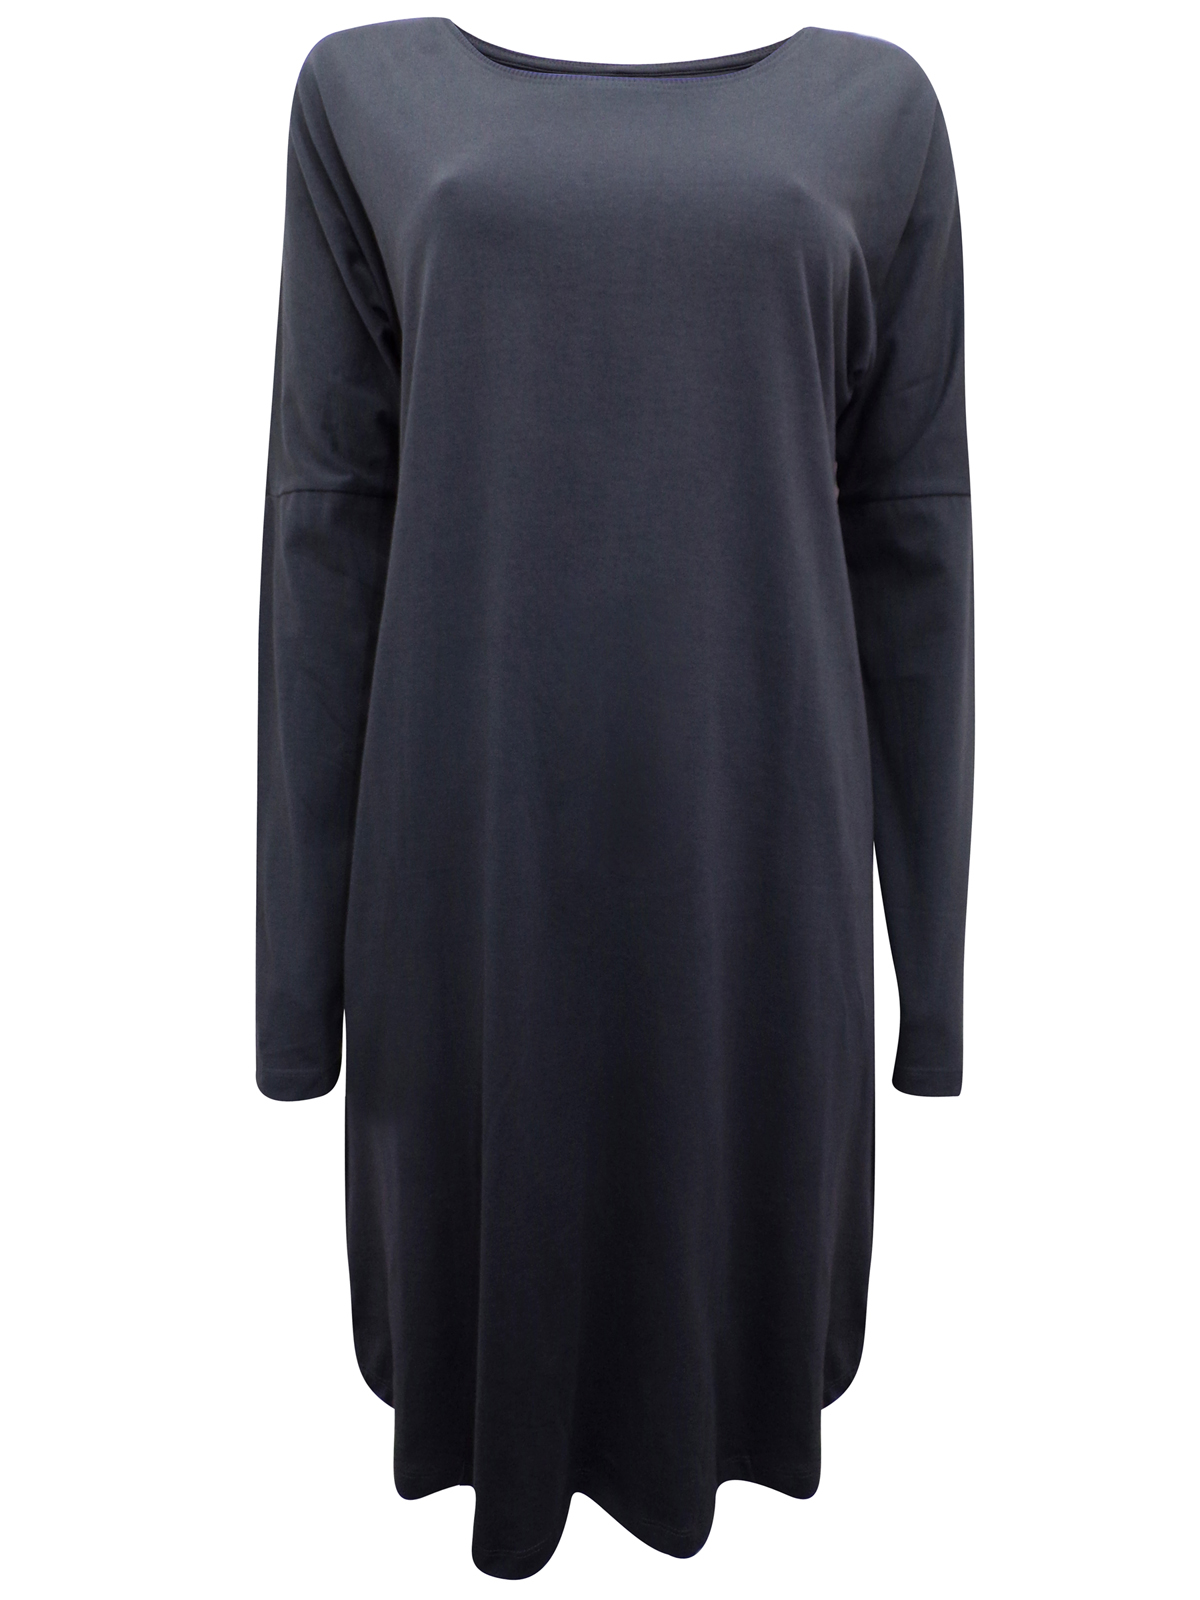 Cloth & Co - - Cloth&Co INK Organic Cotton Long Sleeve Dress - Size 10 ...